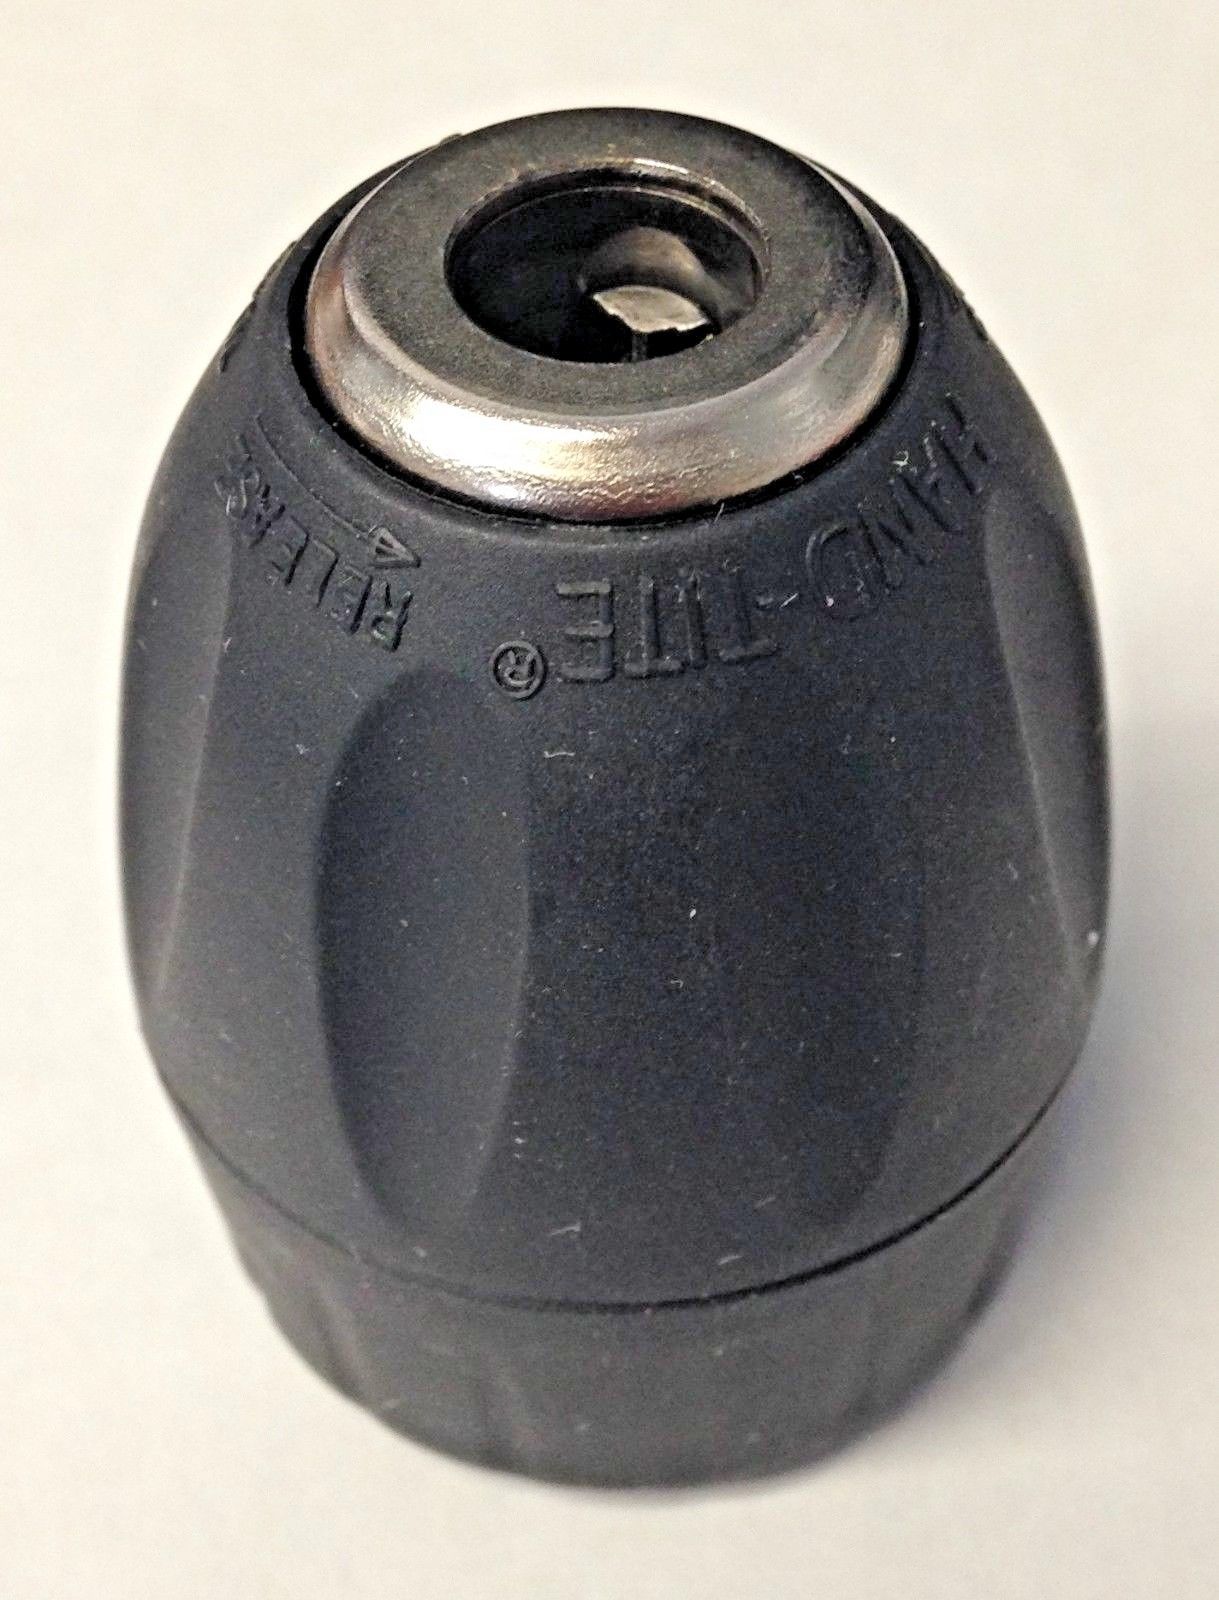 Jacobs 032354C Hand-Tite Keyless Hammer Drill Chuck 1/2-20 Thread